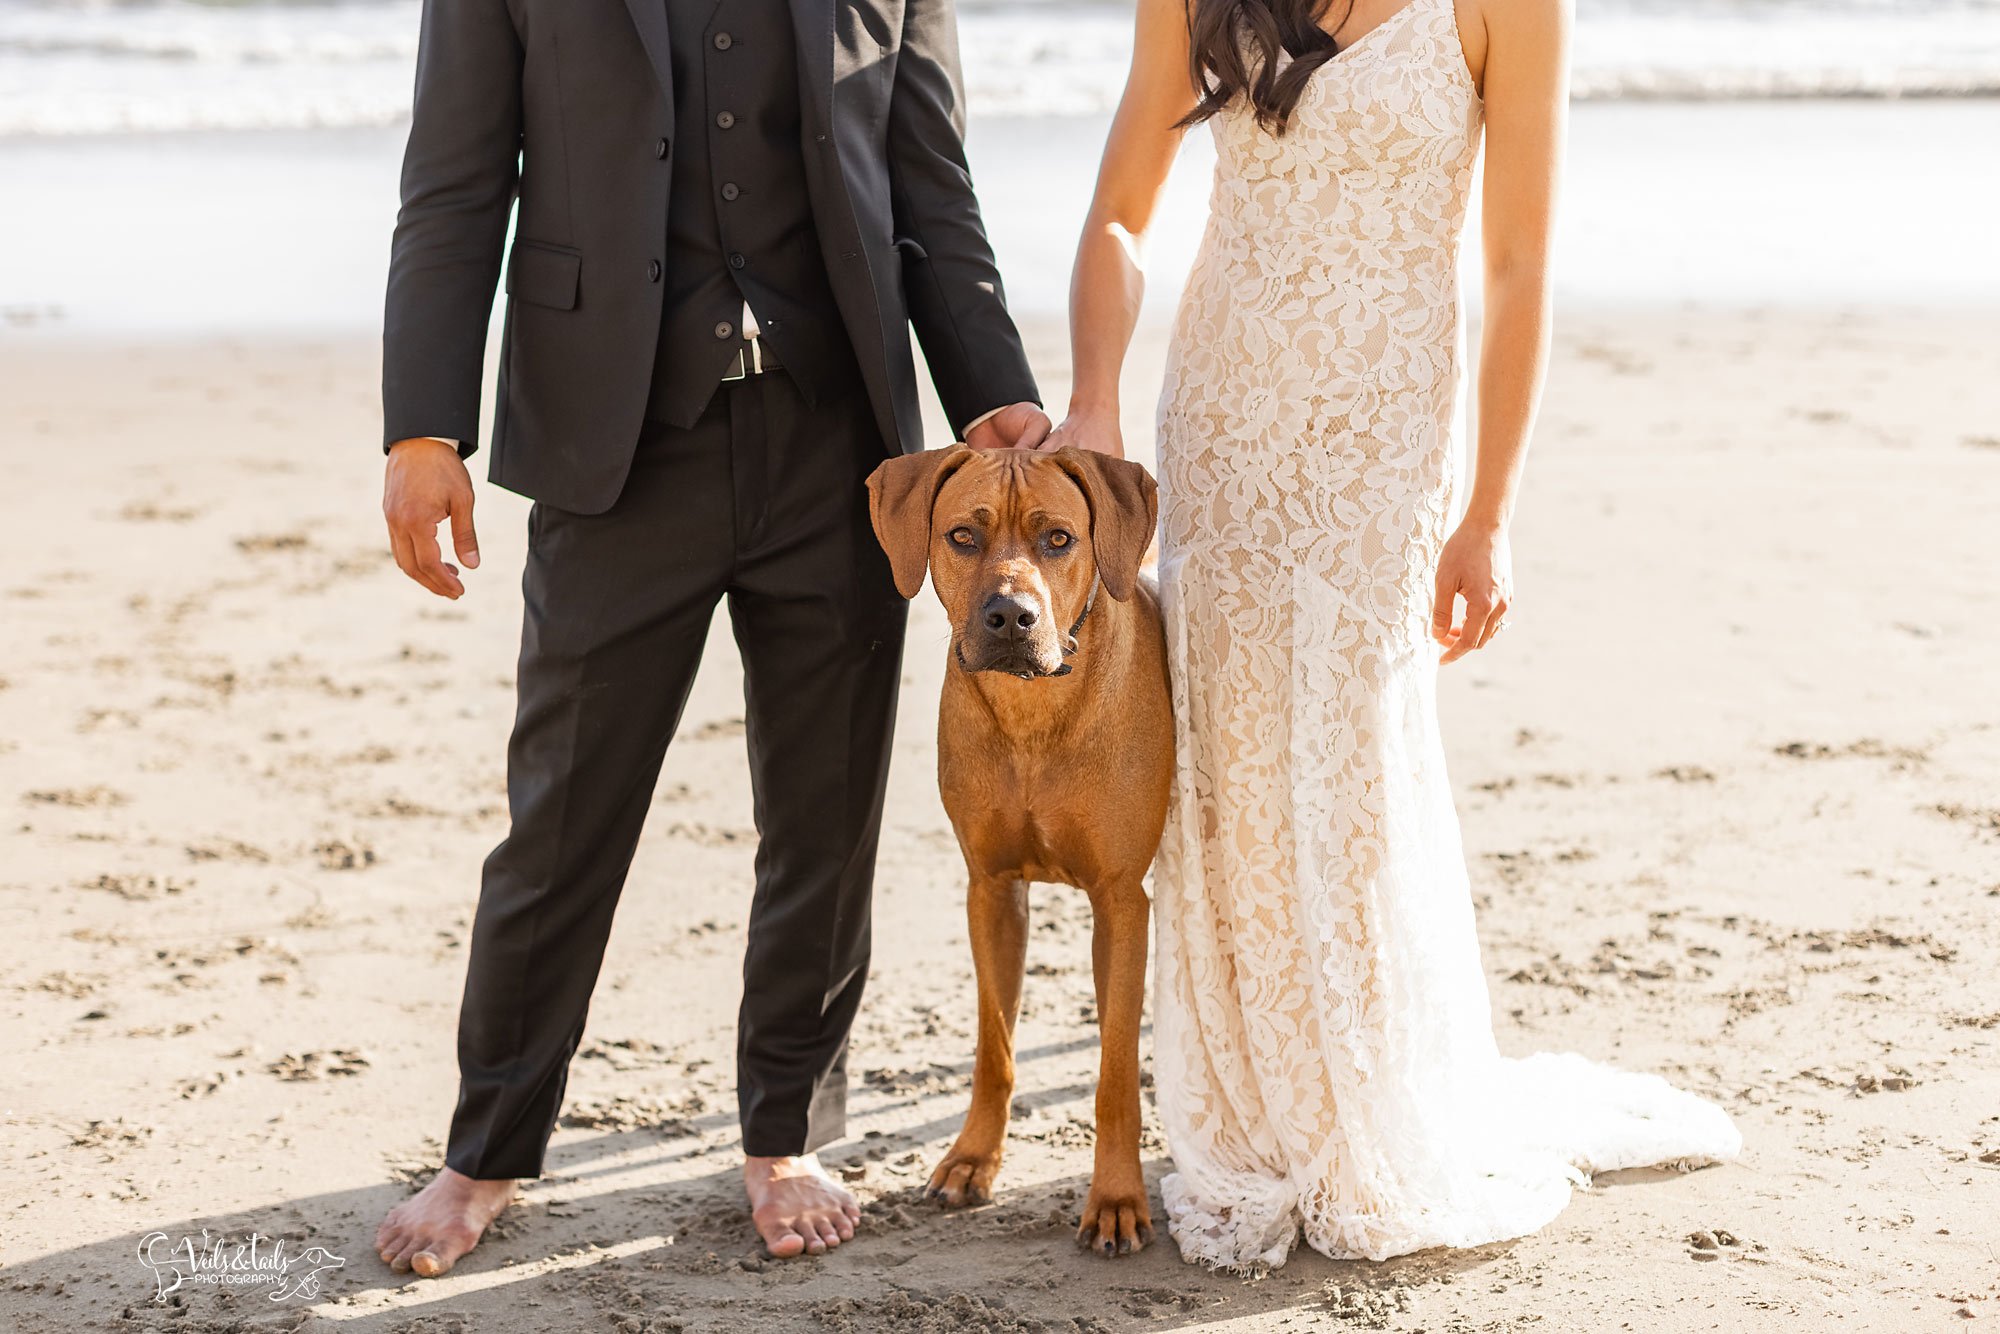 Santa Barbara beach wedding photographer with dog